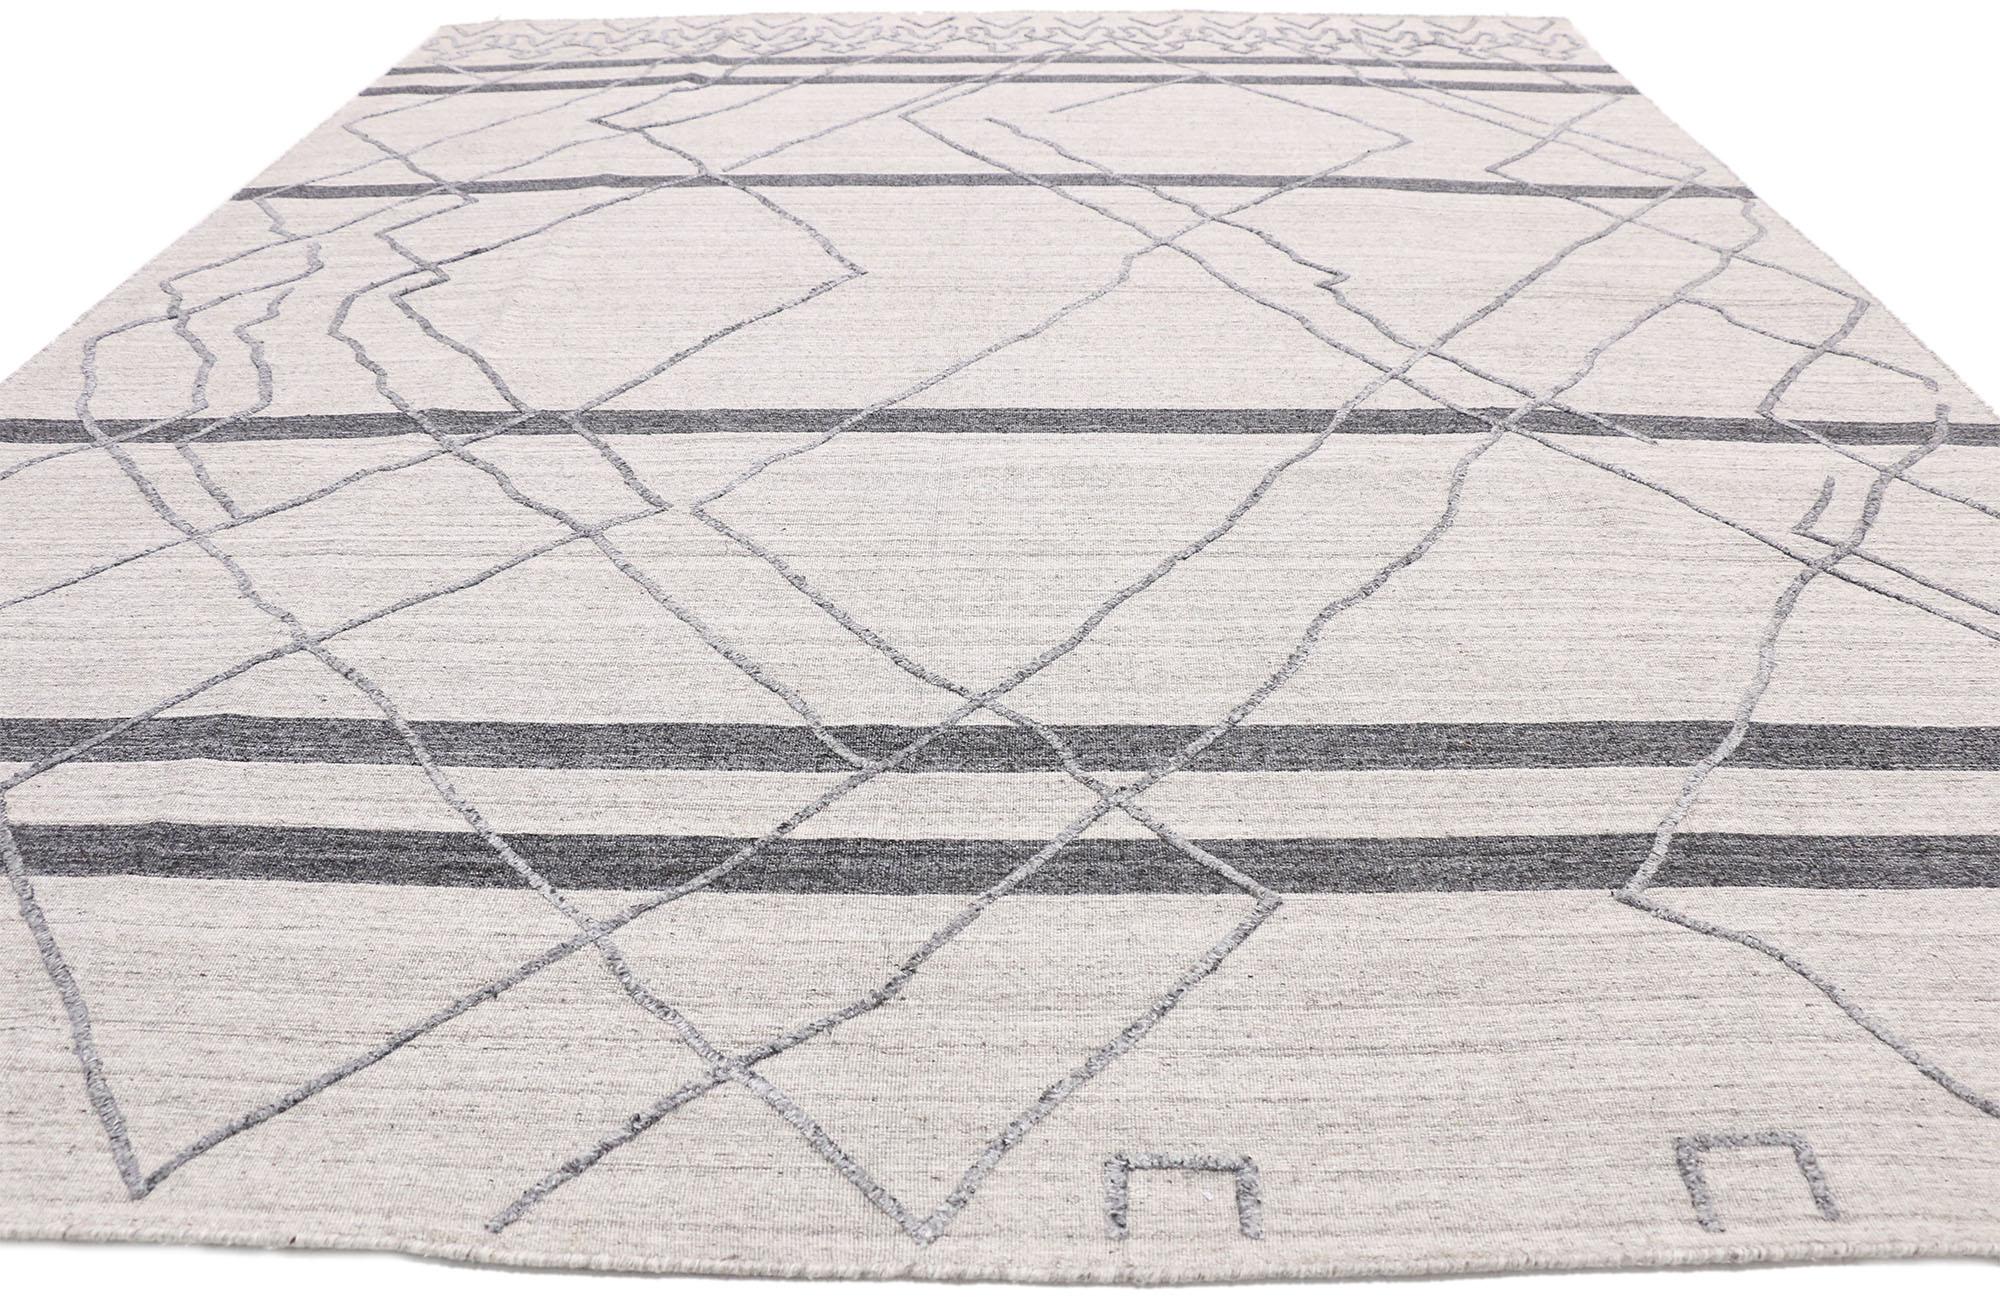 Tribal New Contemporary Gray Modern Moroccan Style Area Rug with Raised Design (Tapis de sol contemporain gris moderne de style marocain avec design en relief) en vente